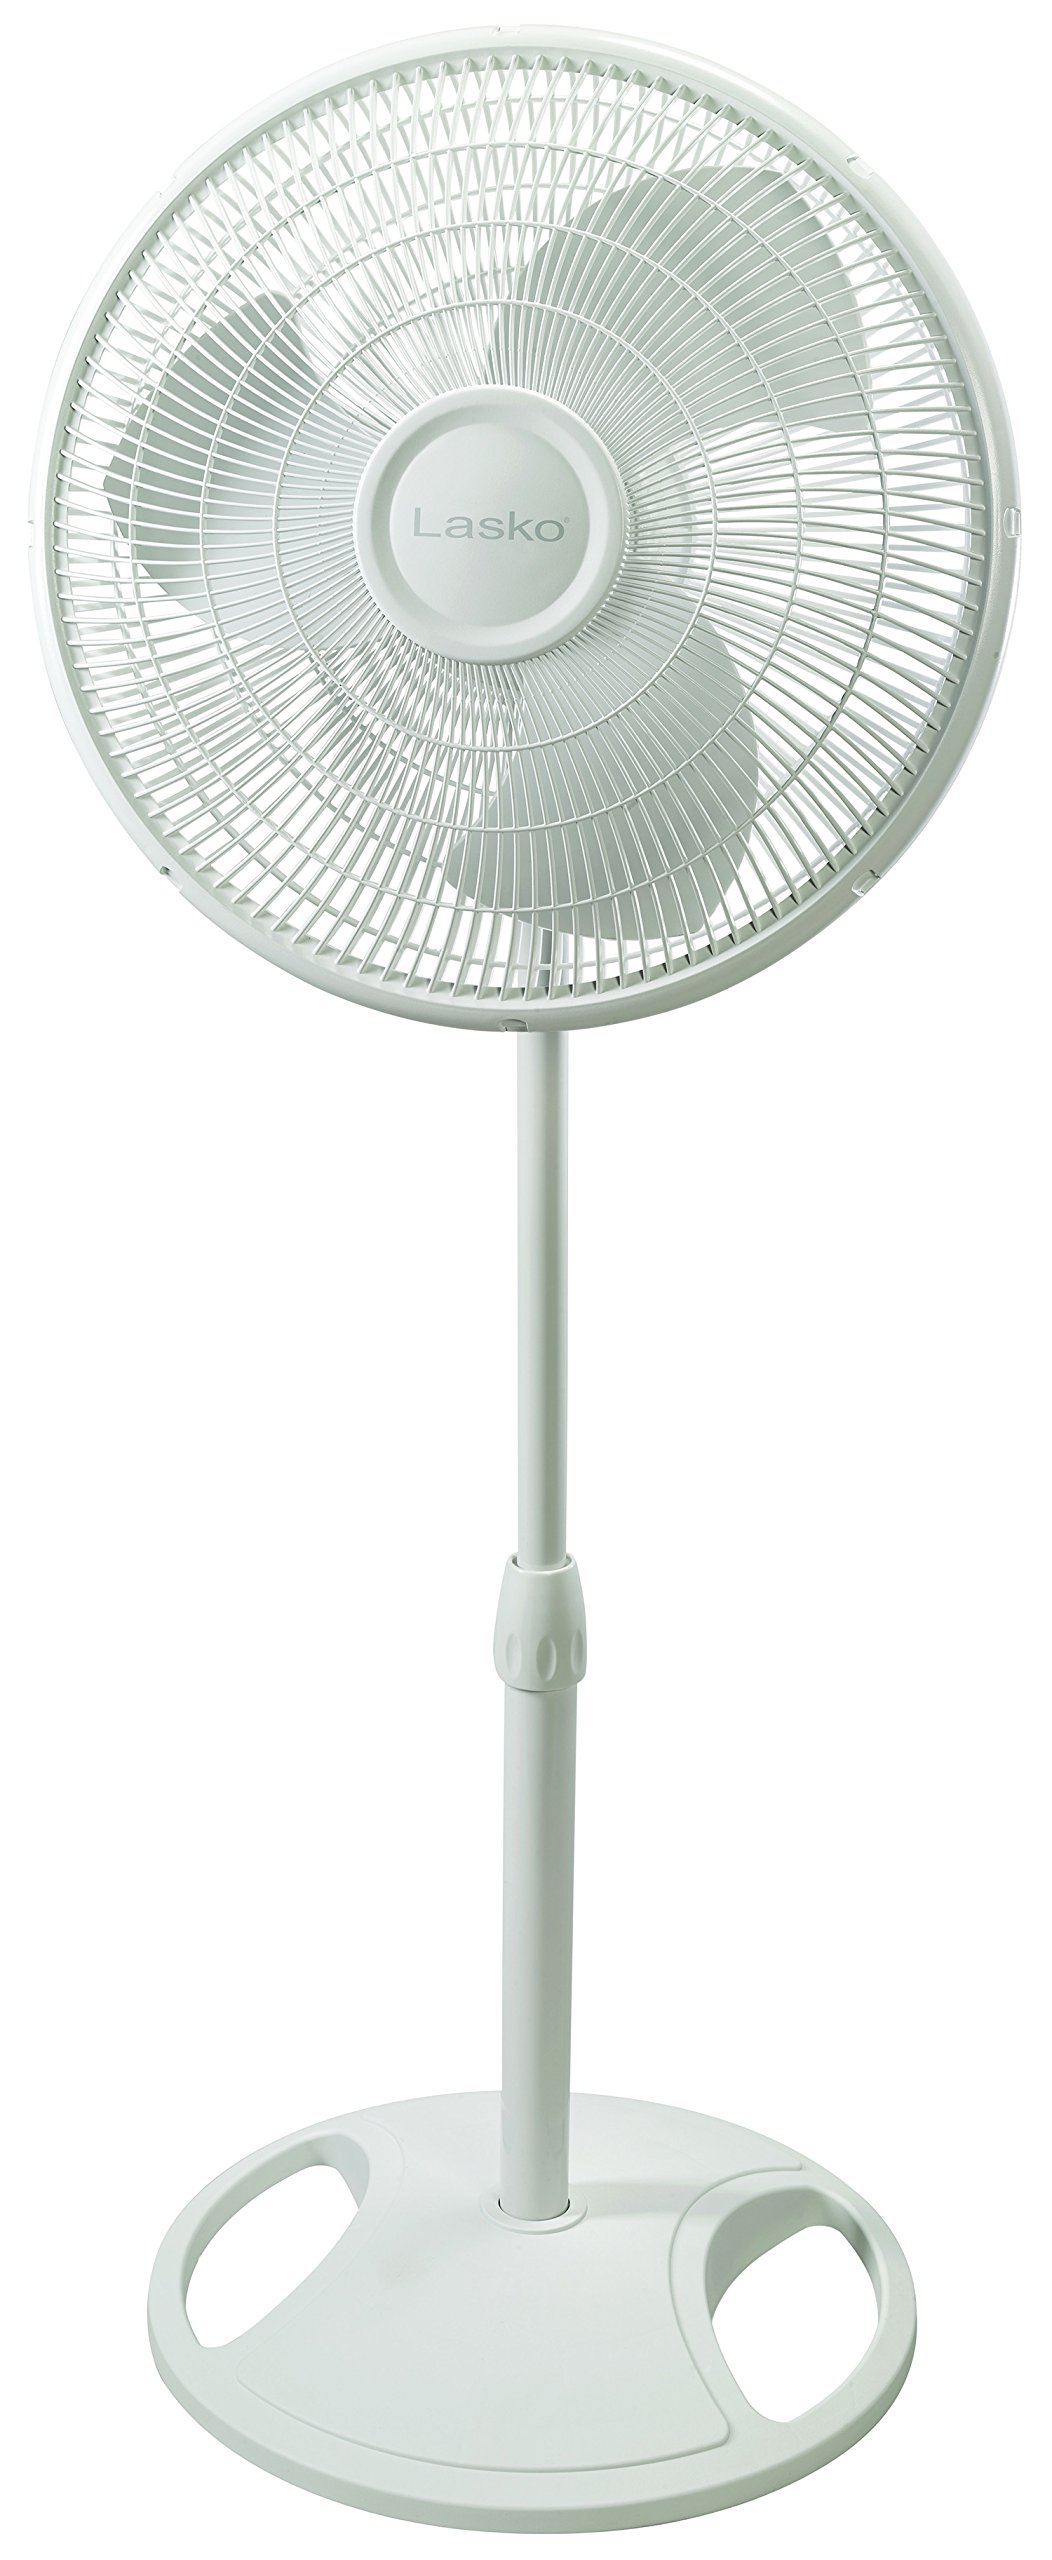 Lasko 2520 Oscillating Stand Fan,White 16 Inch & Oscillating Pedestal Fan, Adjustable Height, 3 Speeds, for Bedroom, Living Room, Home Office and College Dorm Room, 18